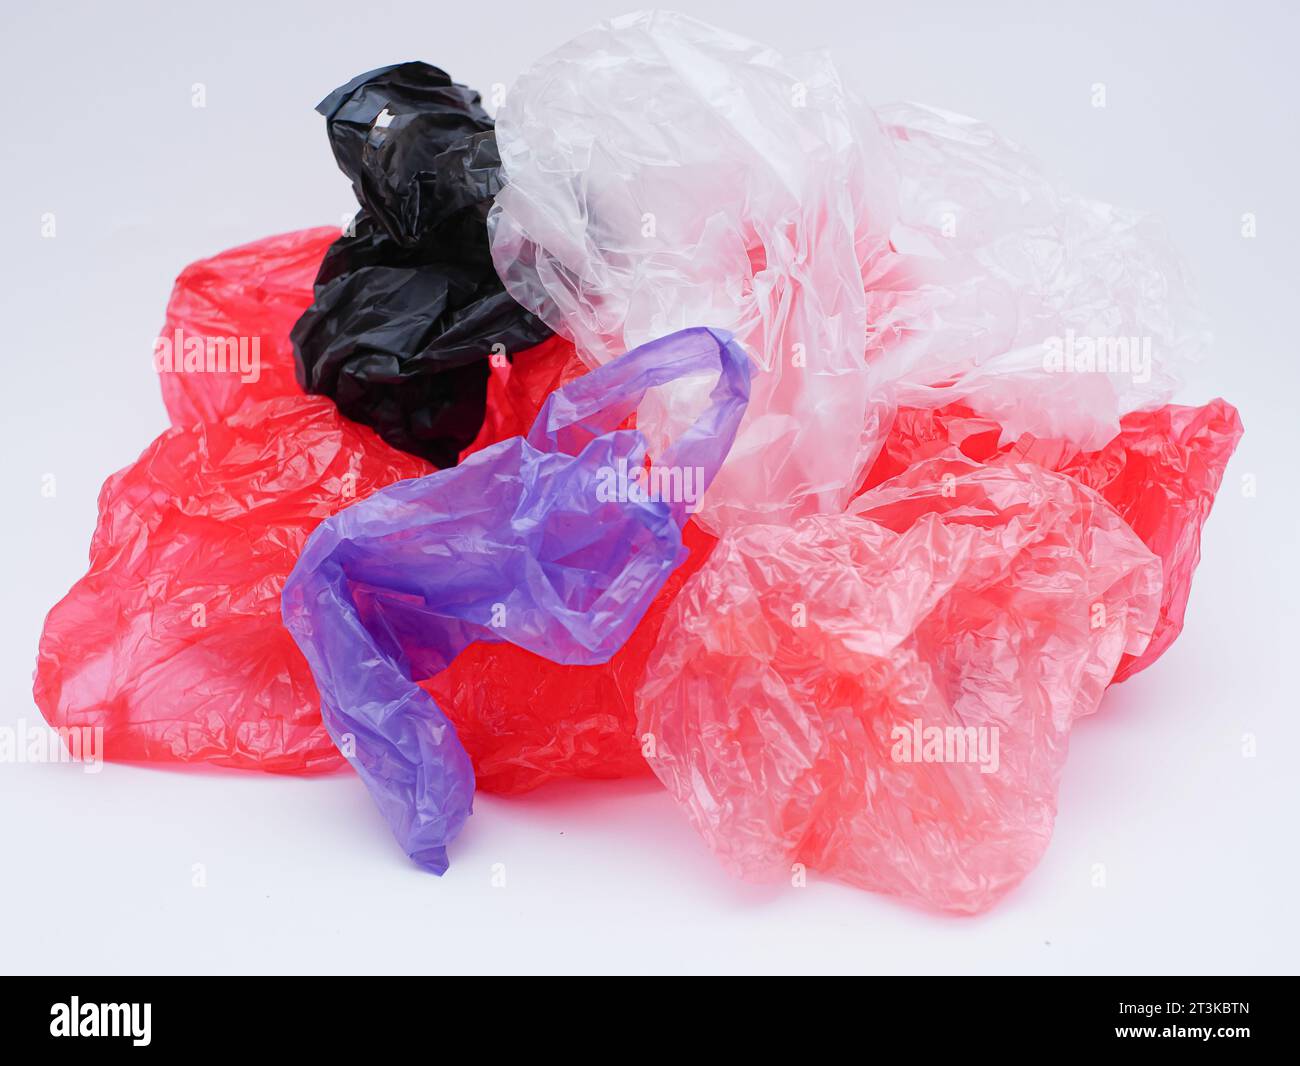 https://c8.alamy.com/comp/2T3KBTN/plastic-bags-isolated-on-a-white-background-danger-of-plastic-waste-concept-2T3KBTN.jpg